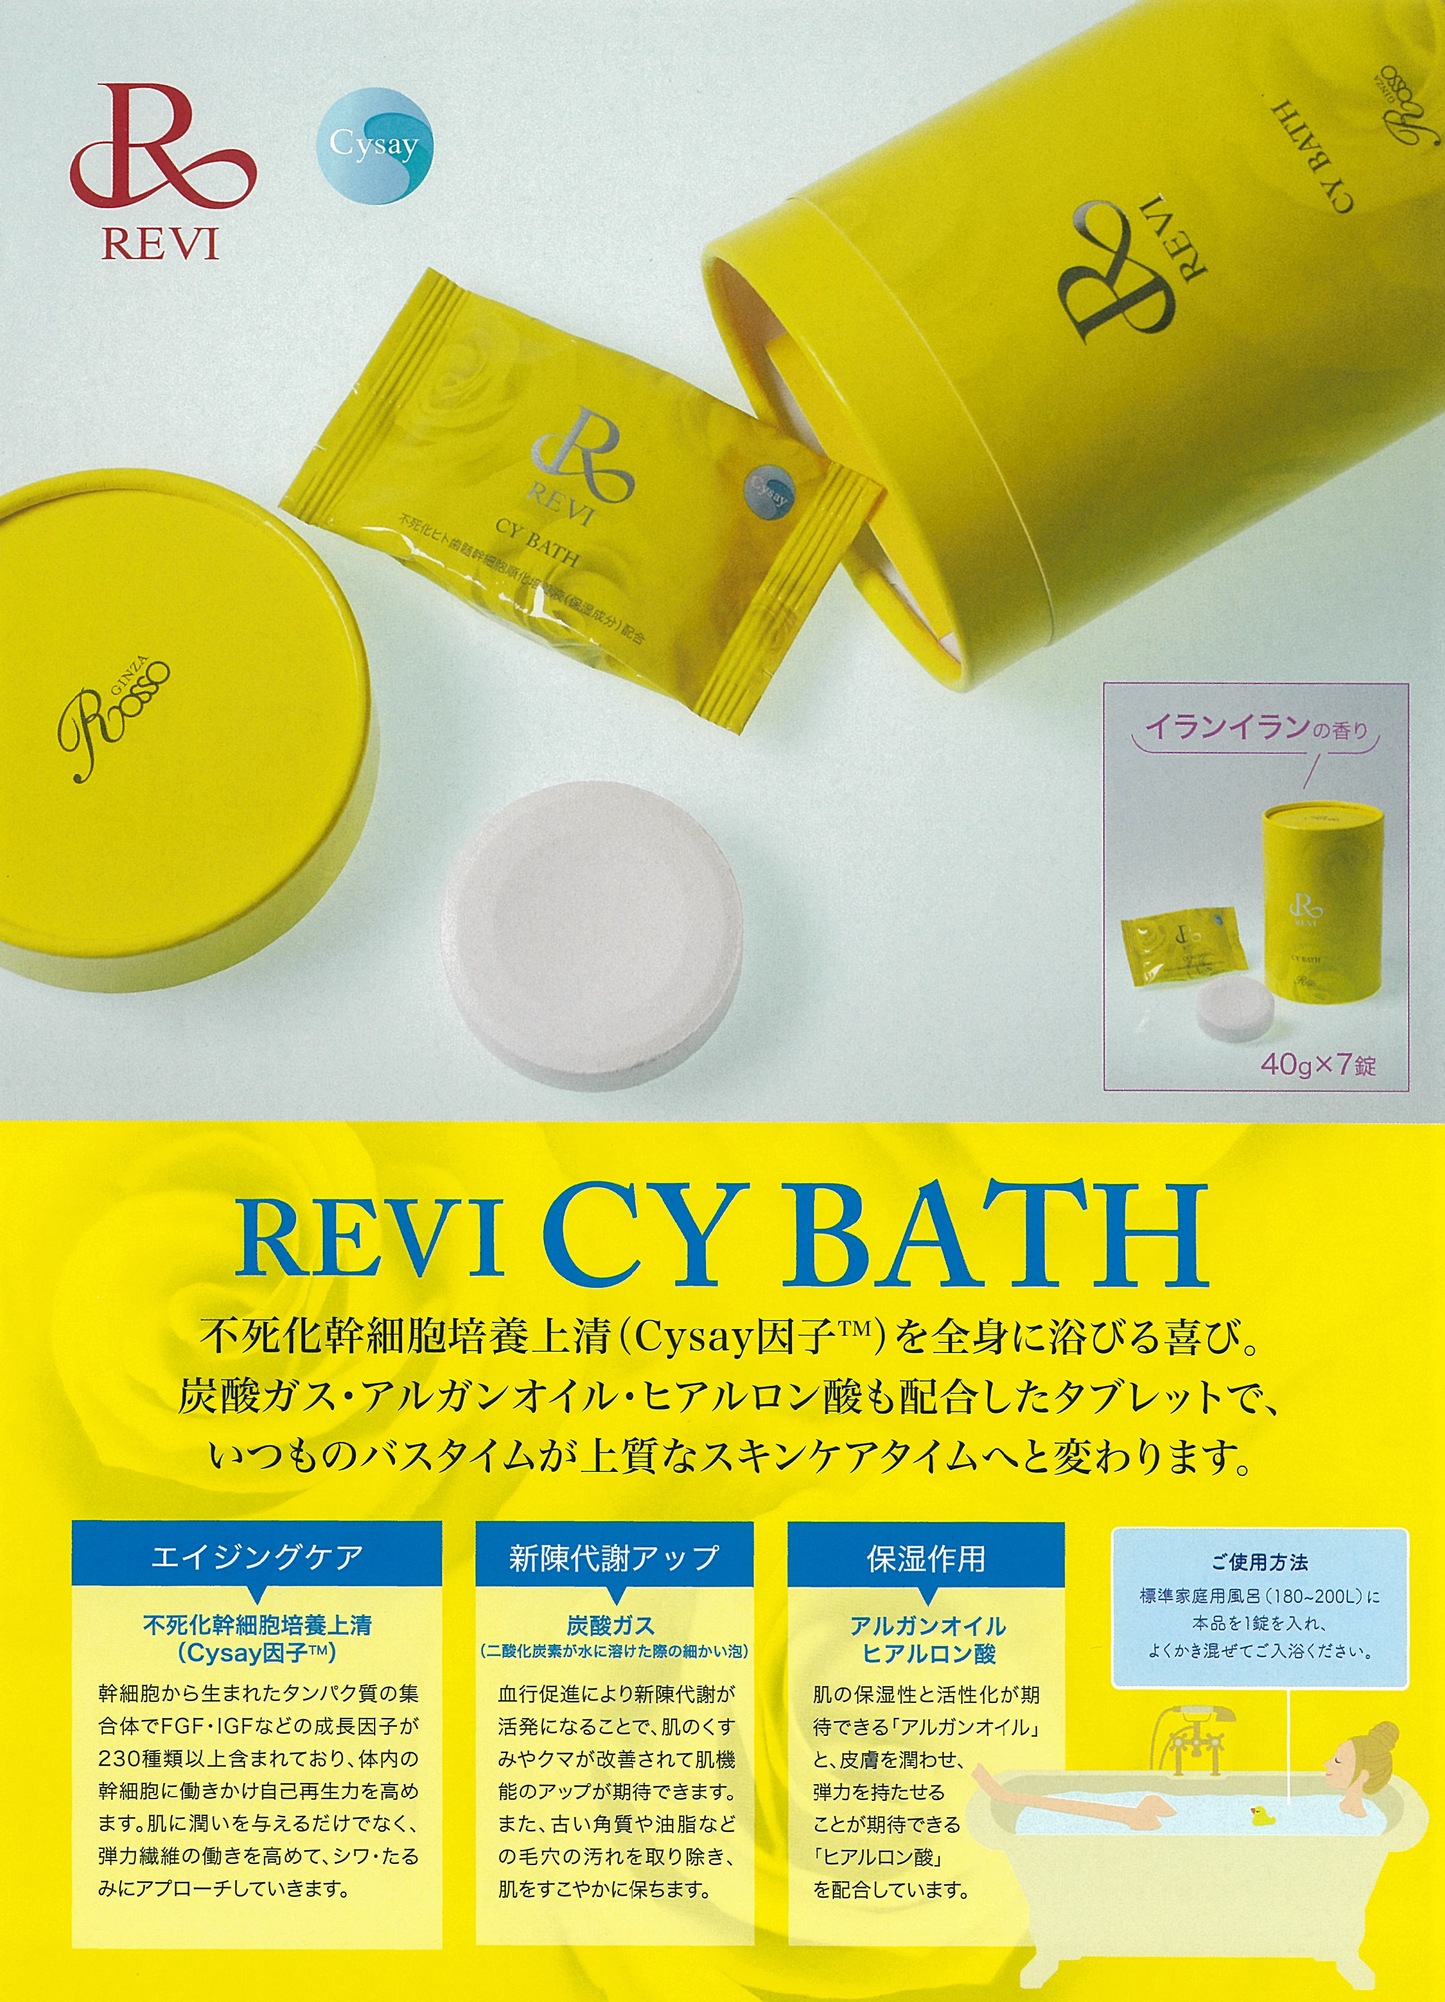 Revi CY BATH 7錠(1錠40ｇ)【入浴剤】